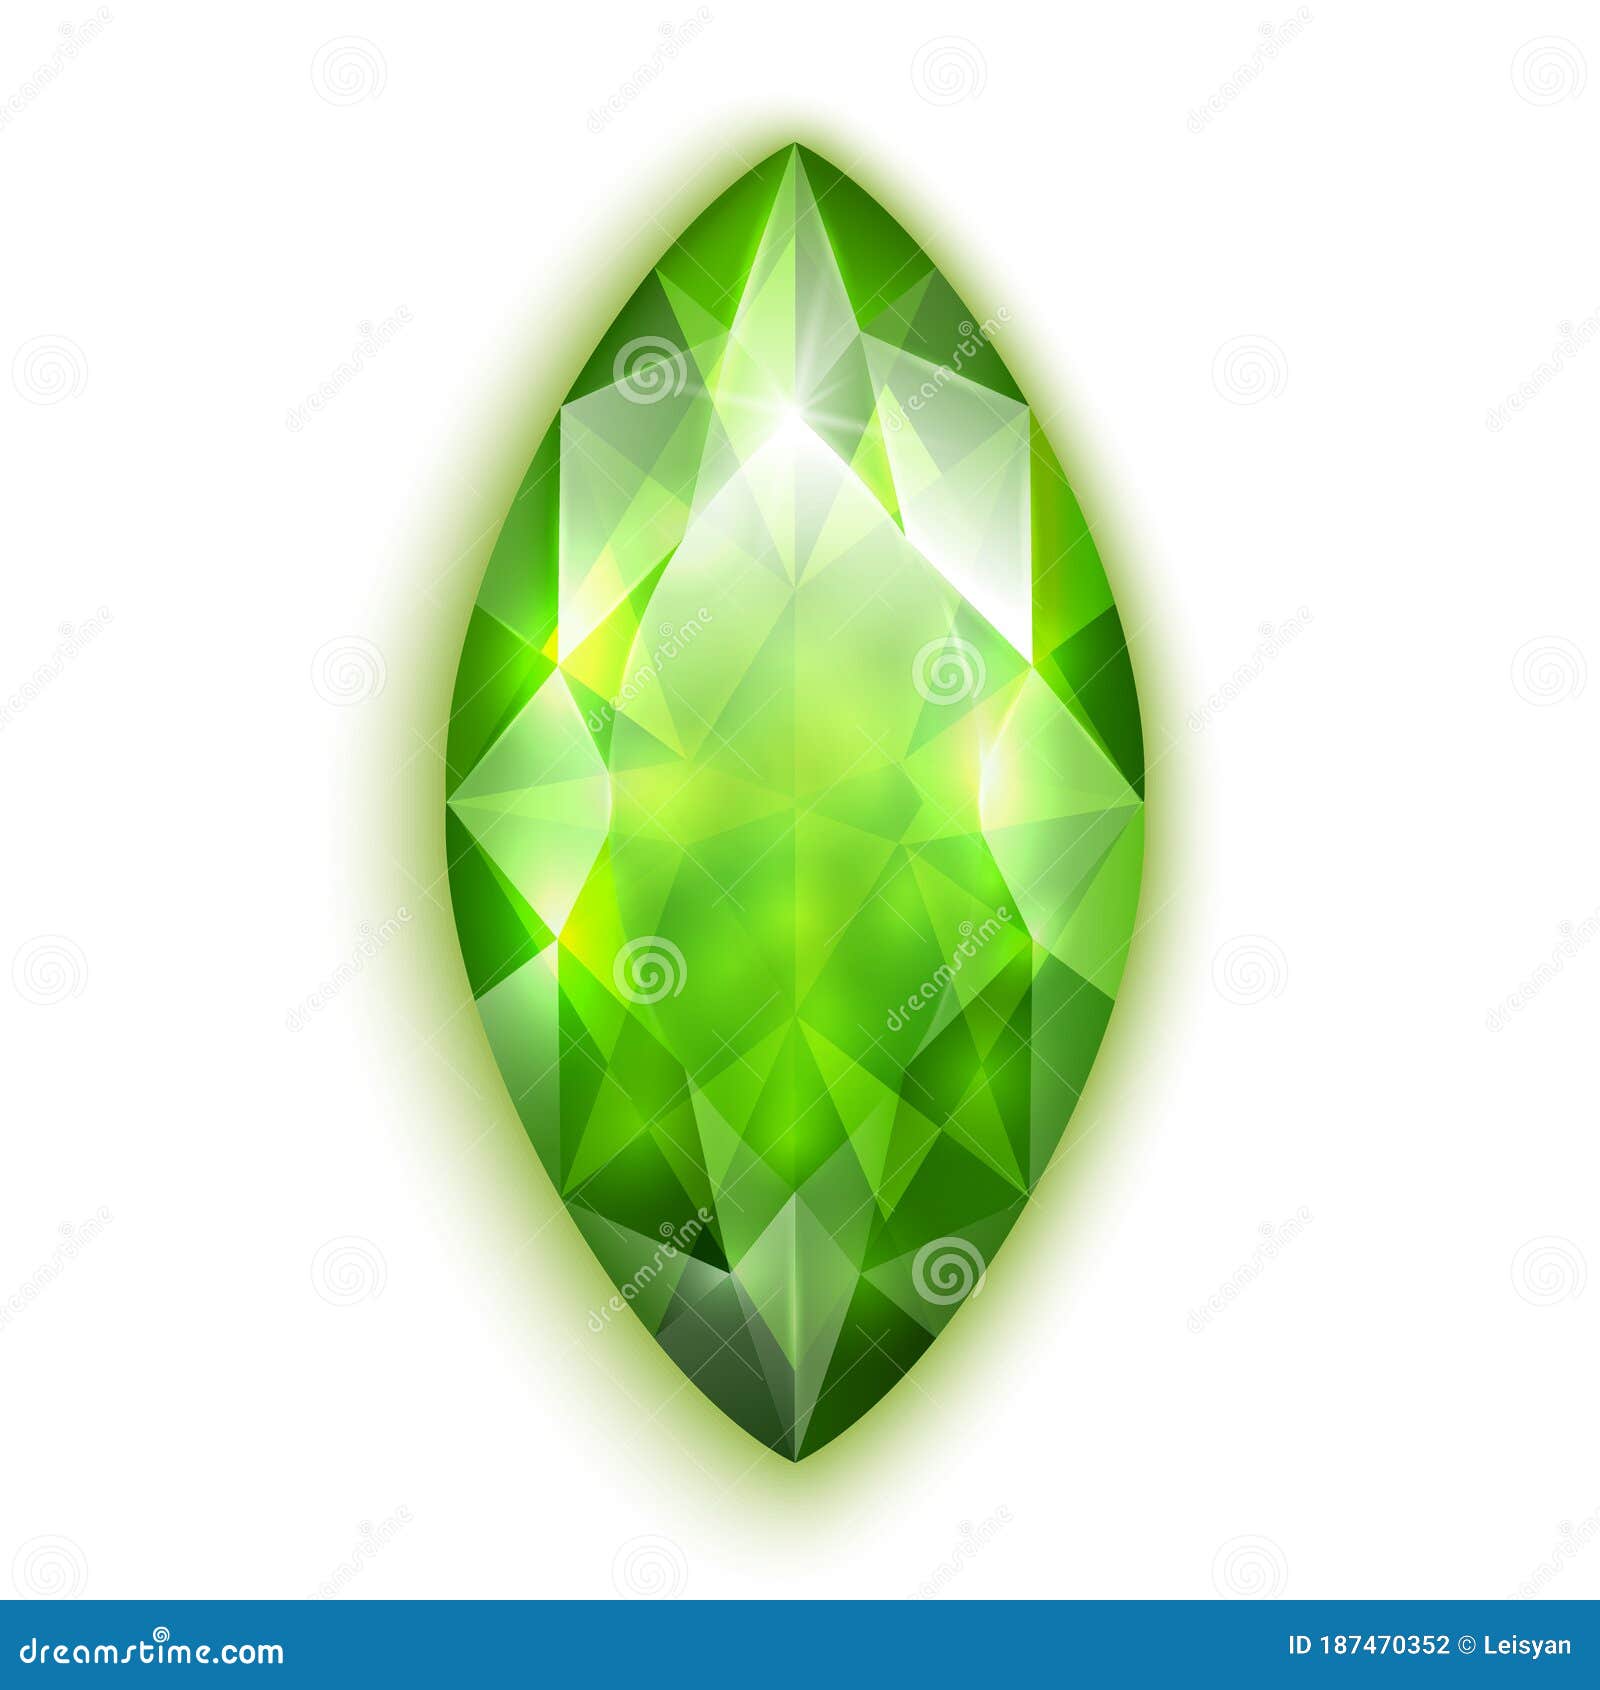 marquise cut emerald - eps10